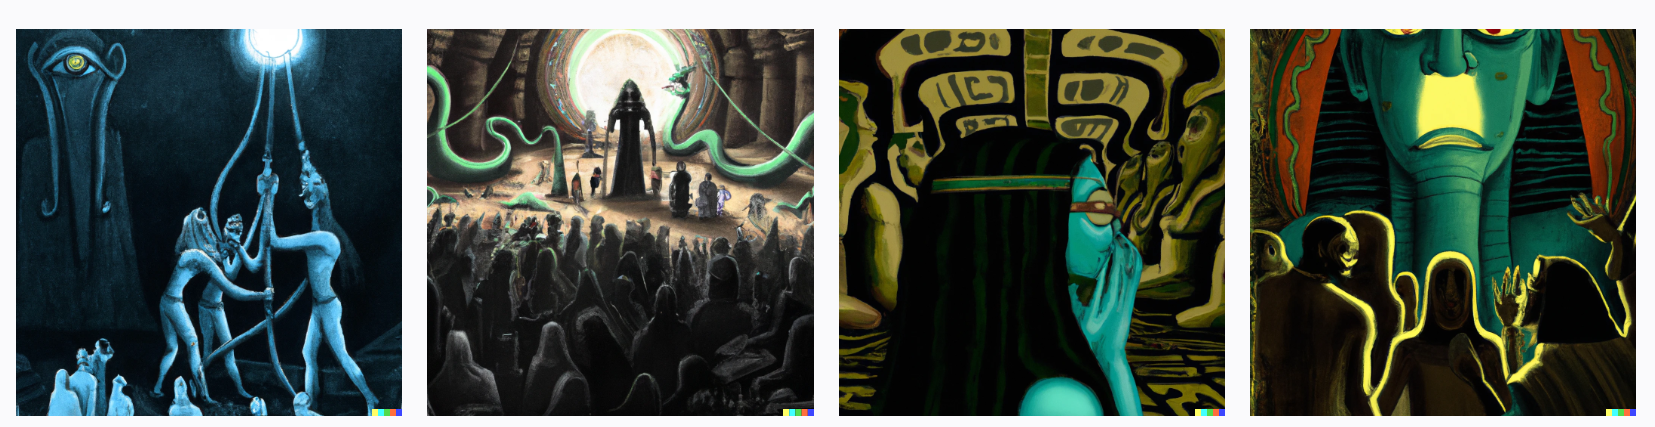 People worshiping Lovecraftian Elder thing, Egyptian art, digital art